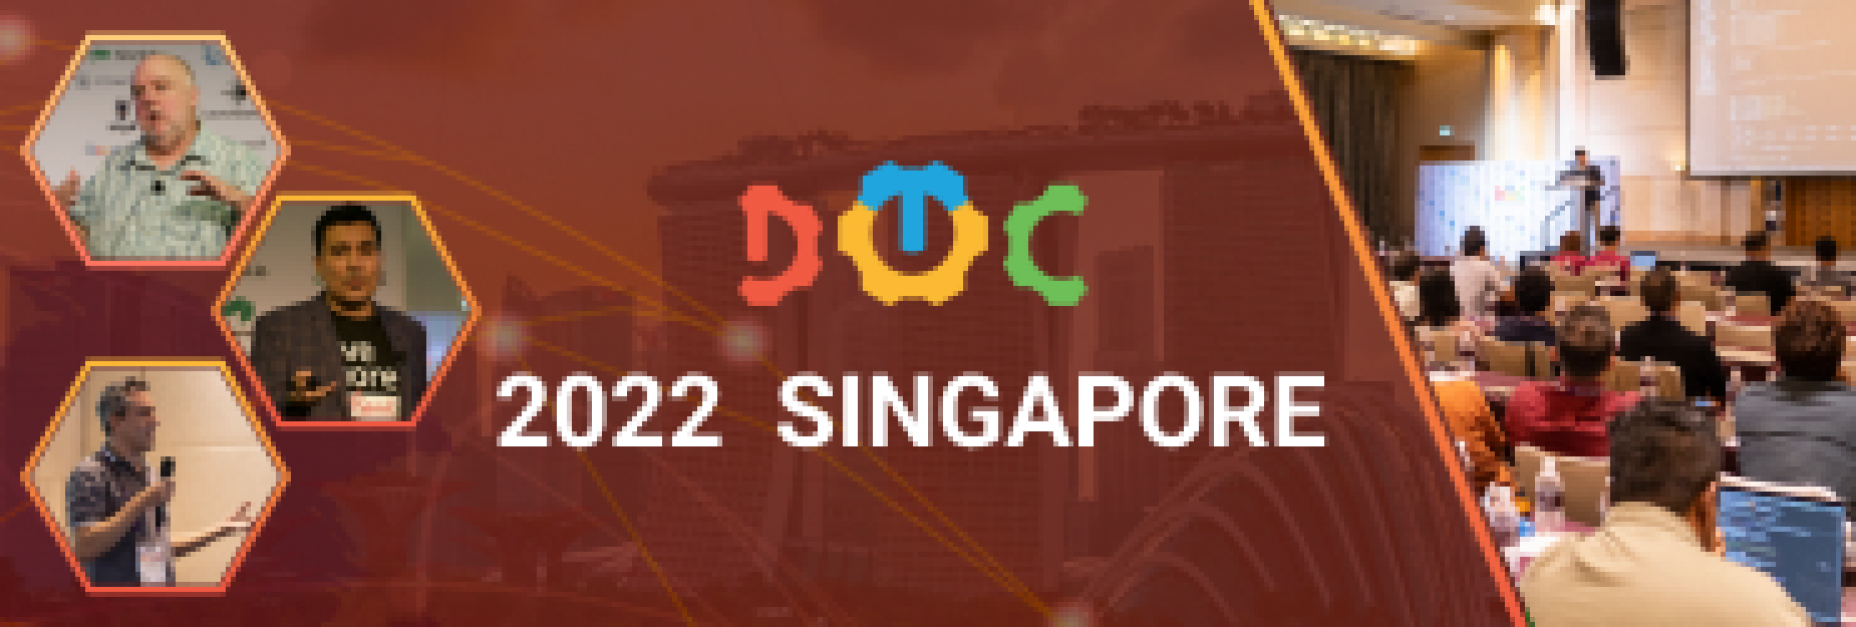 DevOps Conference Singapore 2022